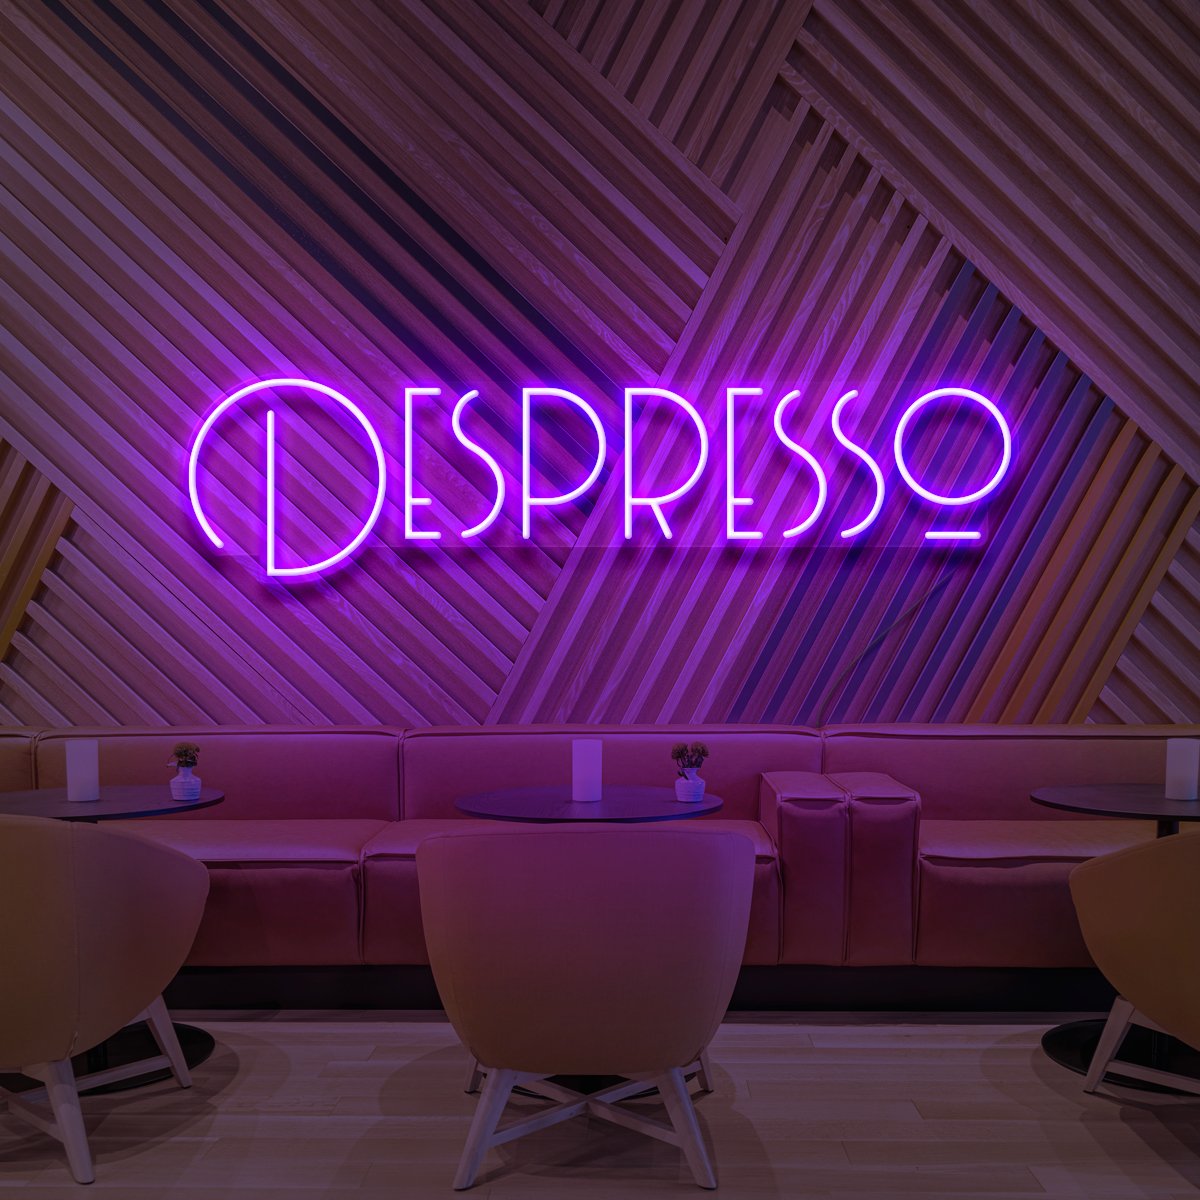 "Despresso" Neon Sign for Cafés